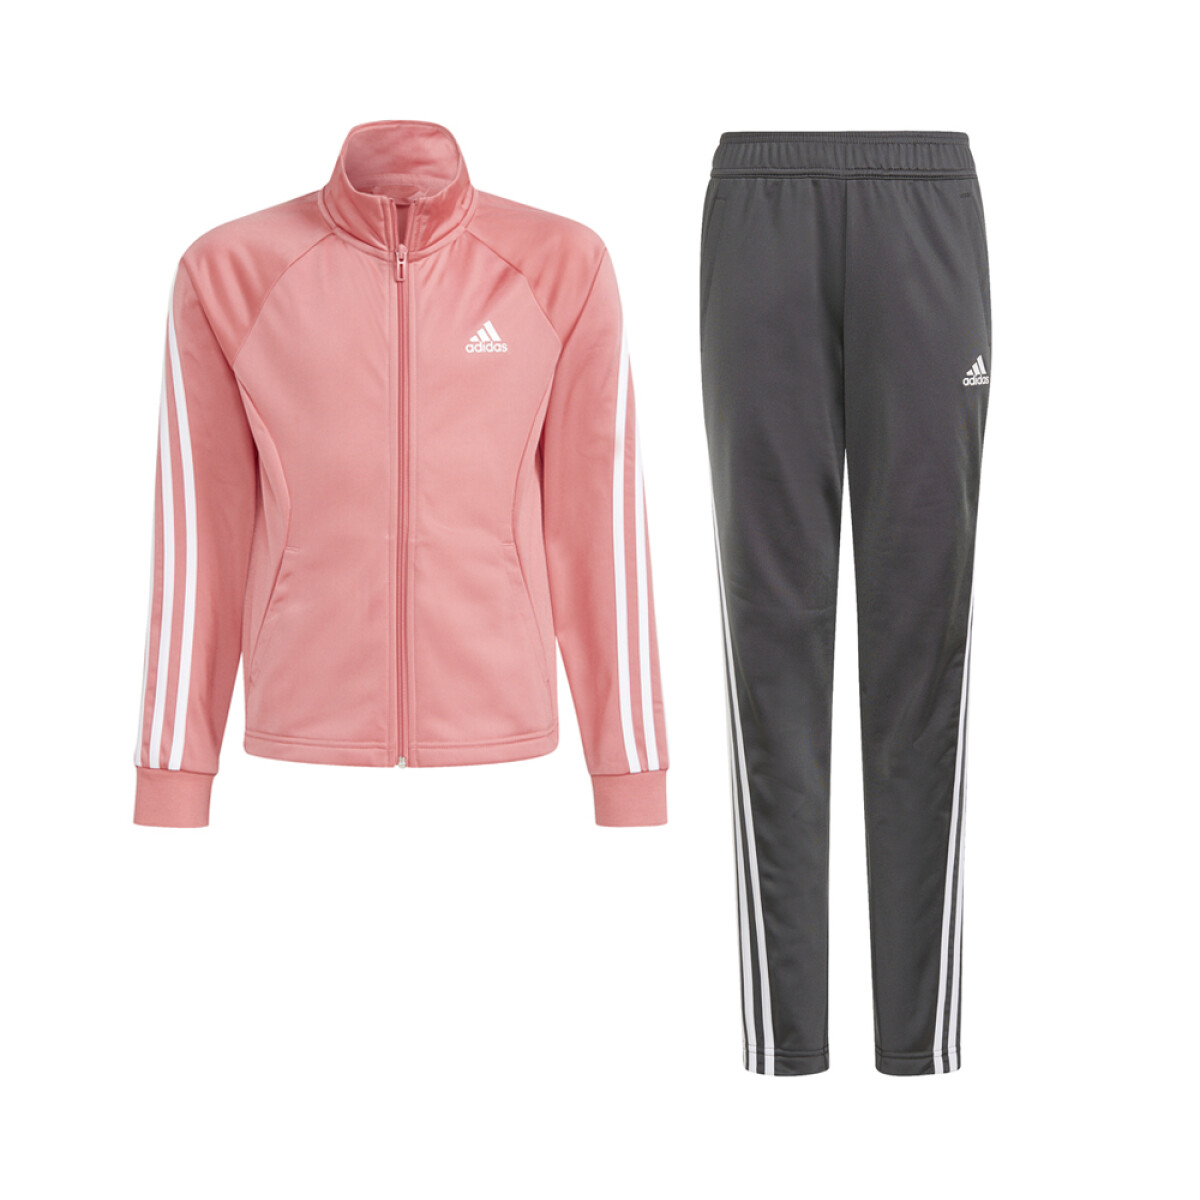 Equipo adidas Primegreen 3S - Pink/Grey 